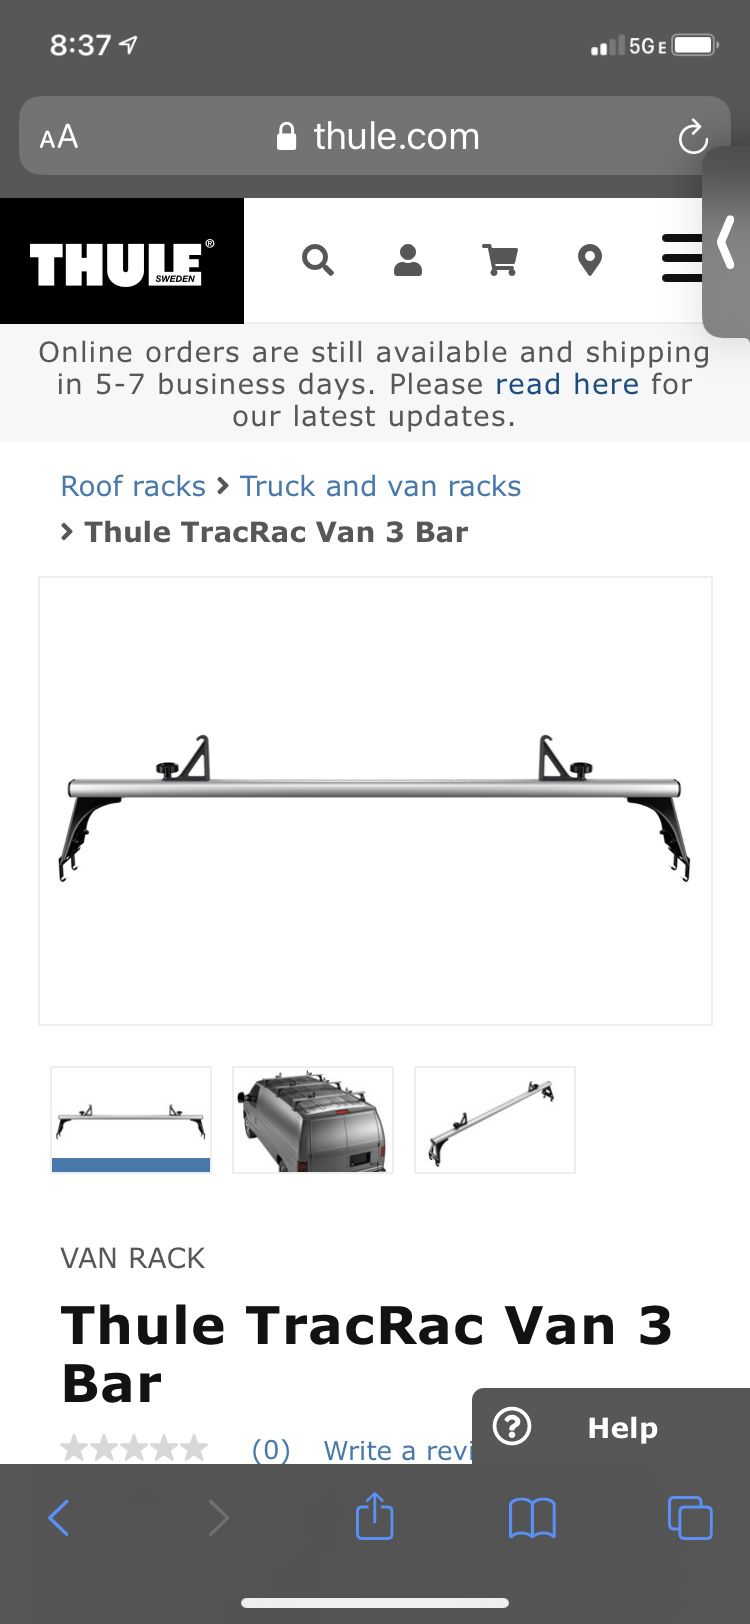 Thule TracRac Van 3 Bar roof rack system